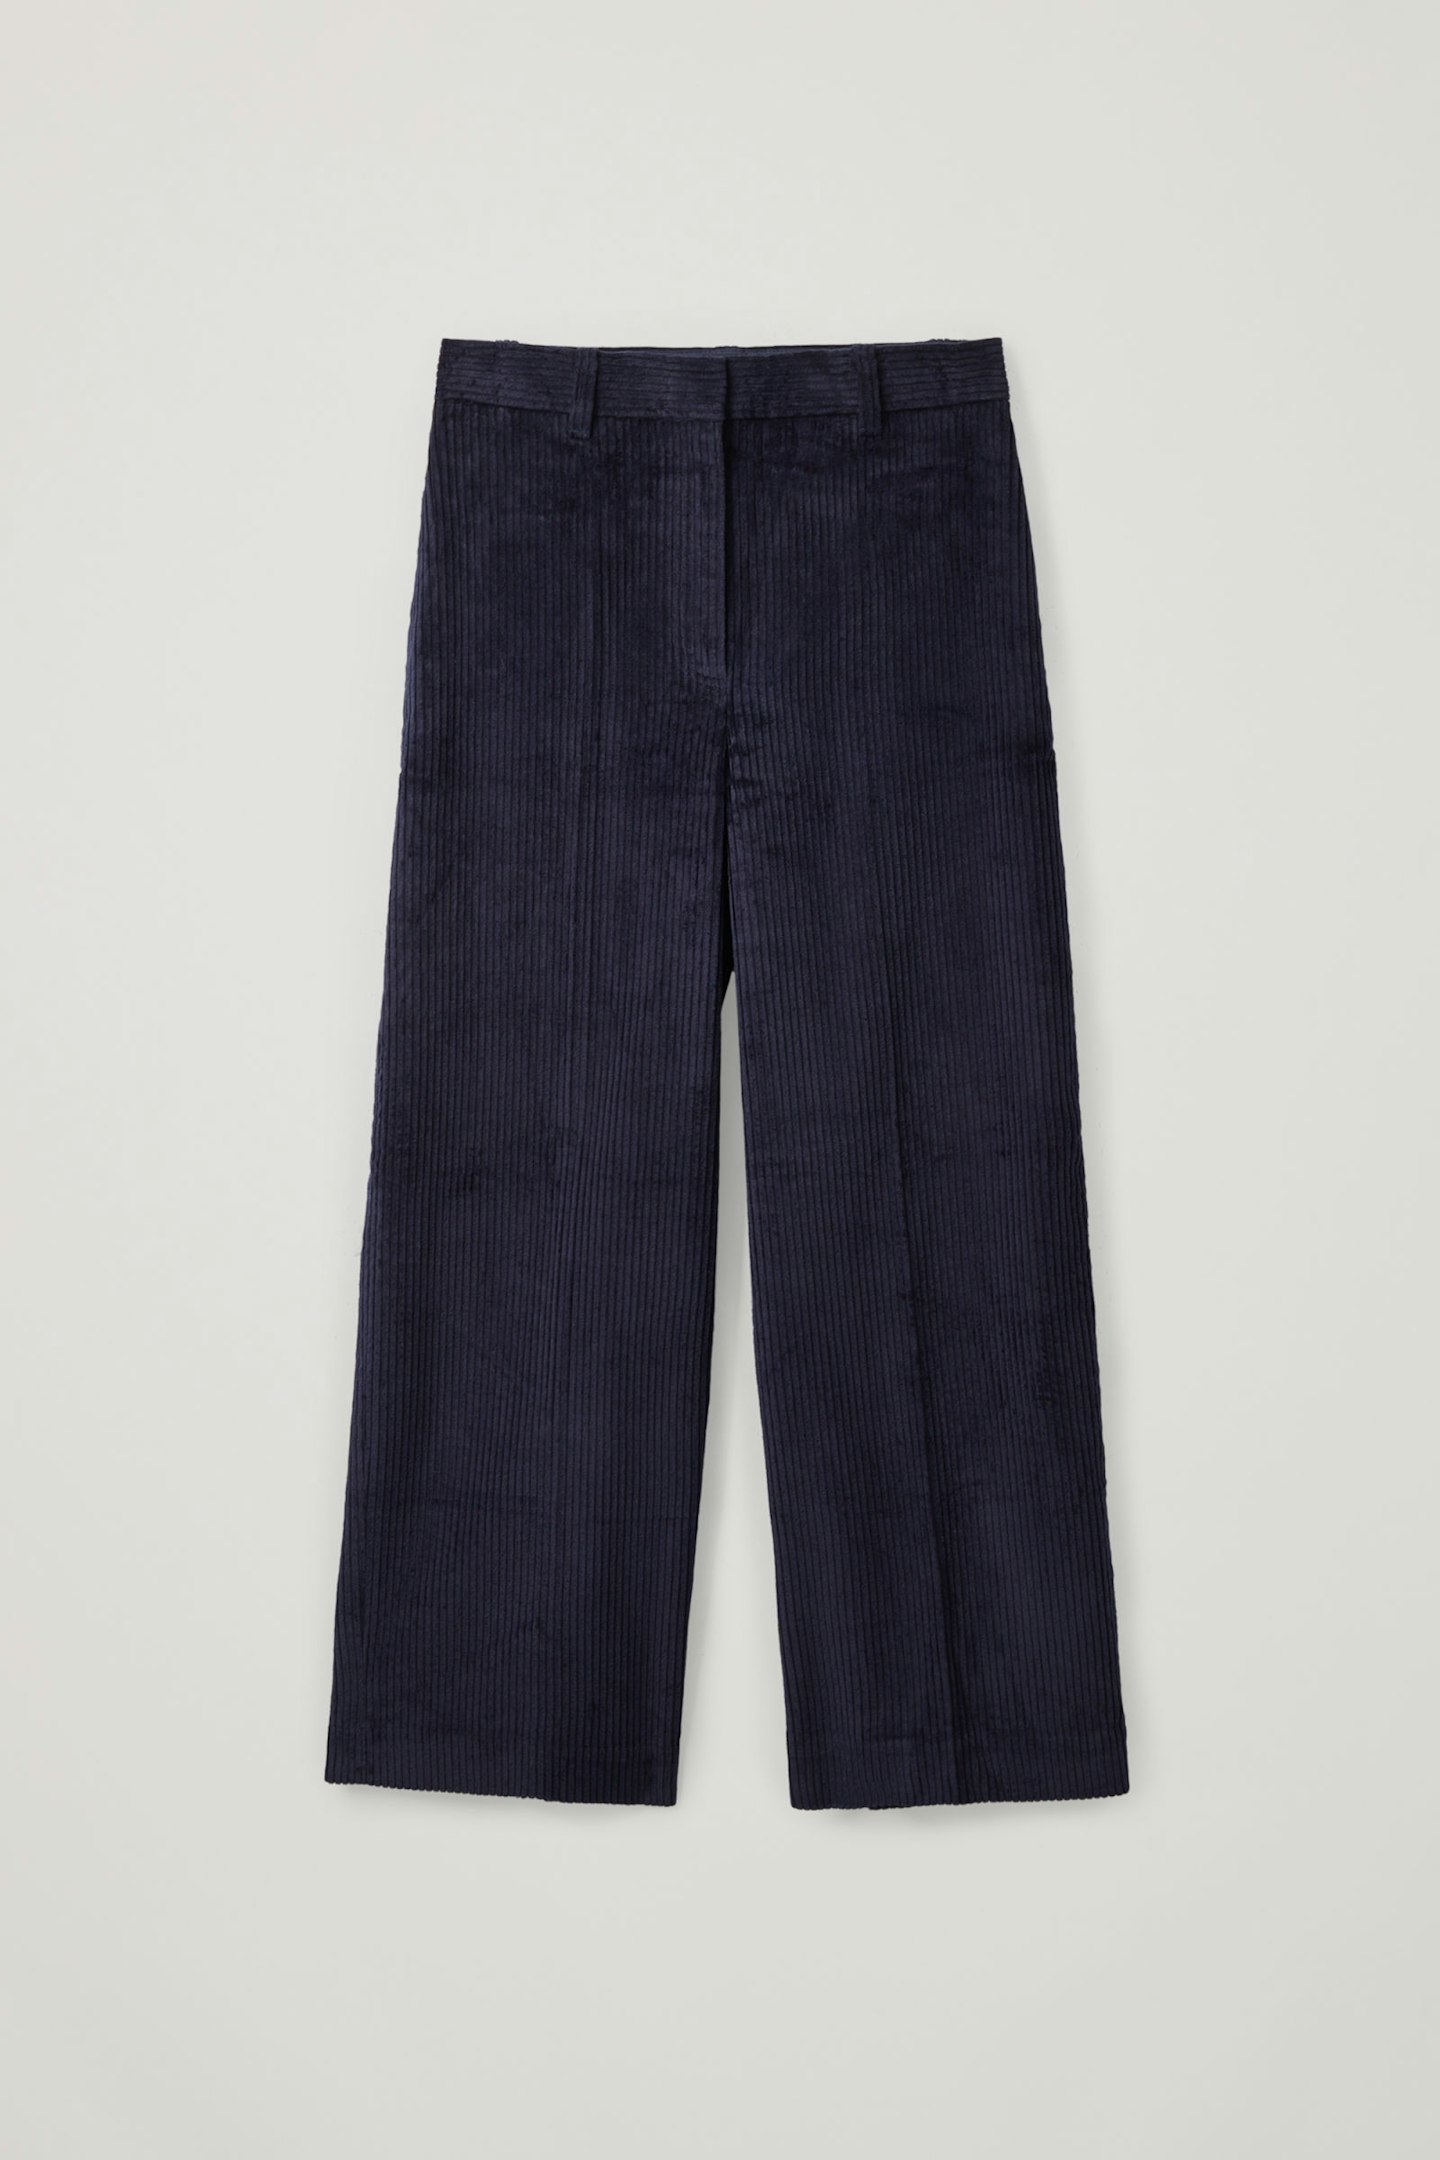 COS, Cotton Wide-Leg Corduroy Trousers, WAS £79 NOW £39.50